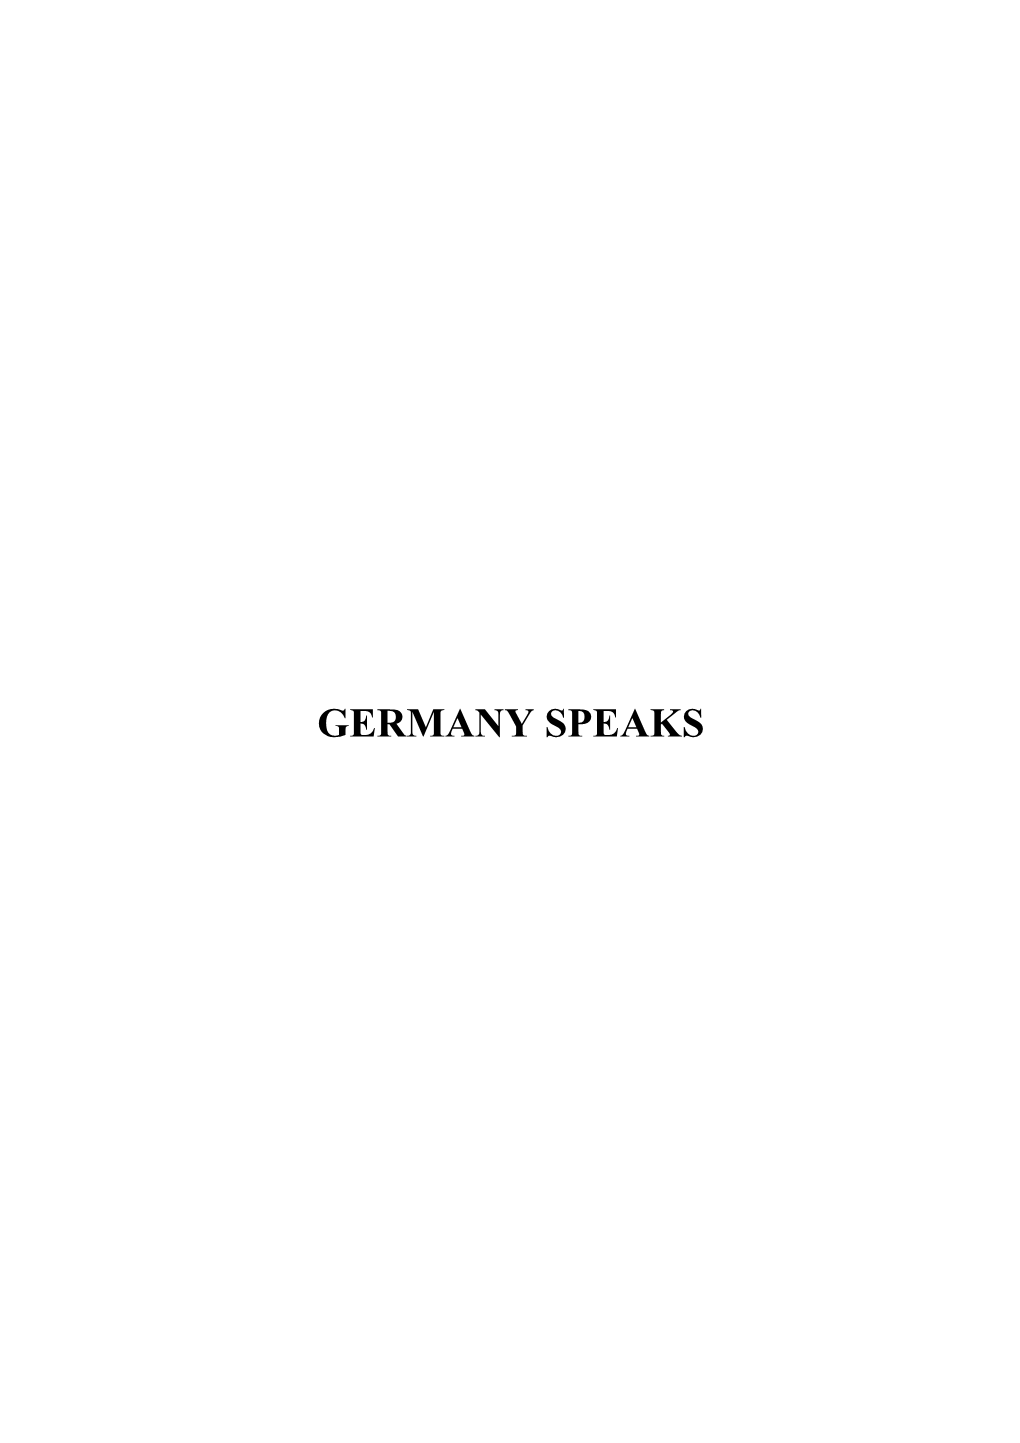 Germany Speaks.Pdf